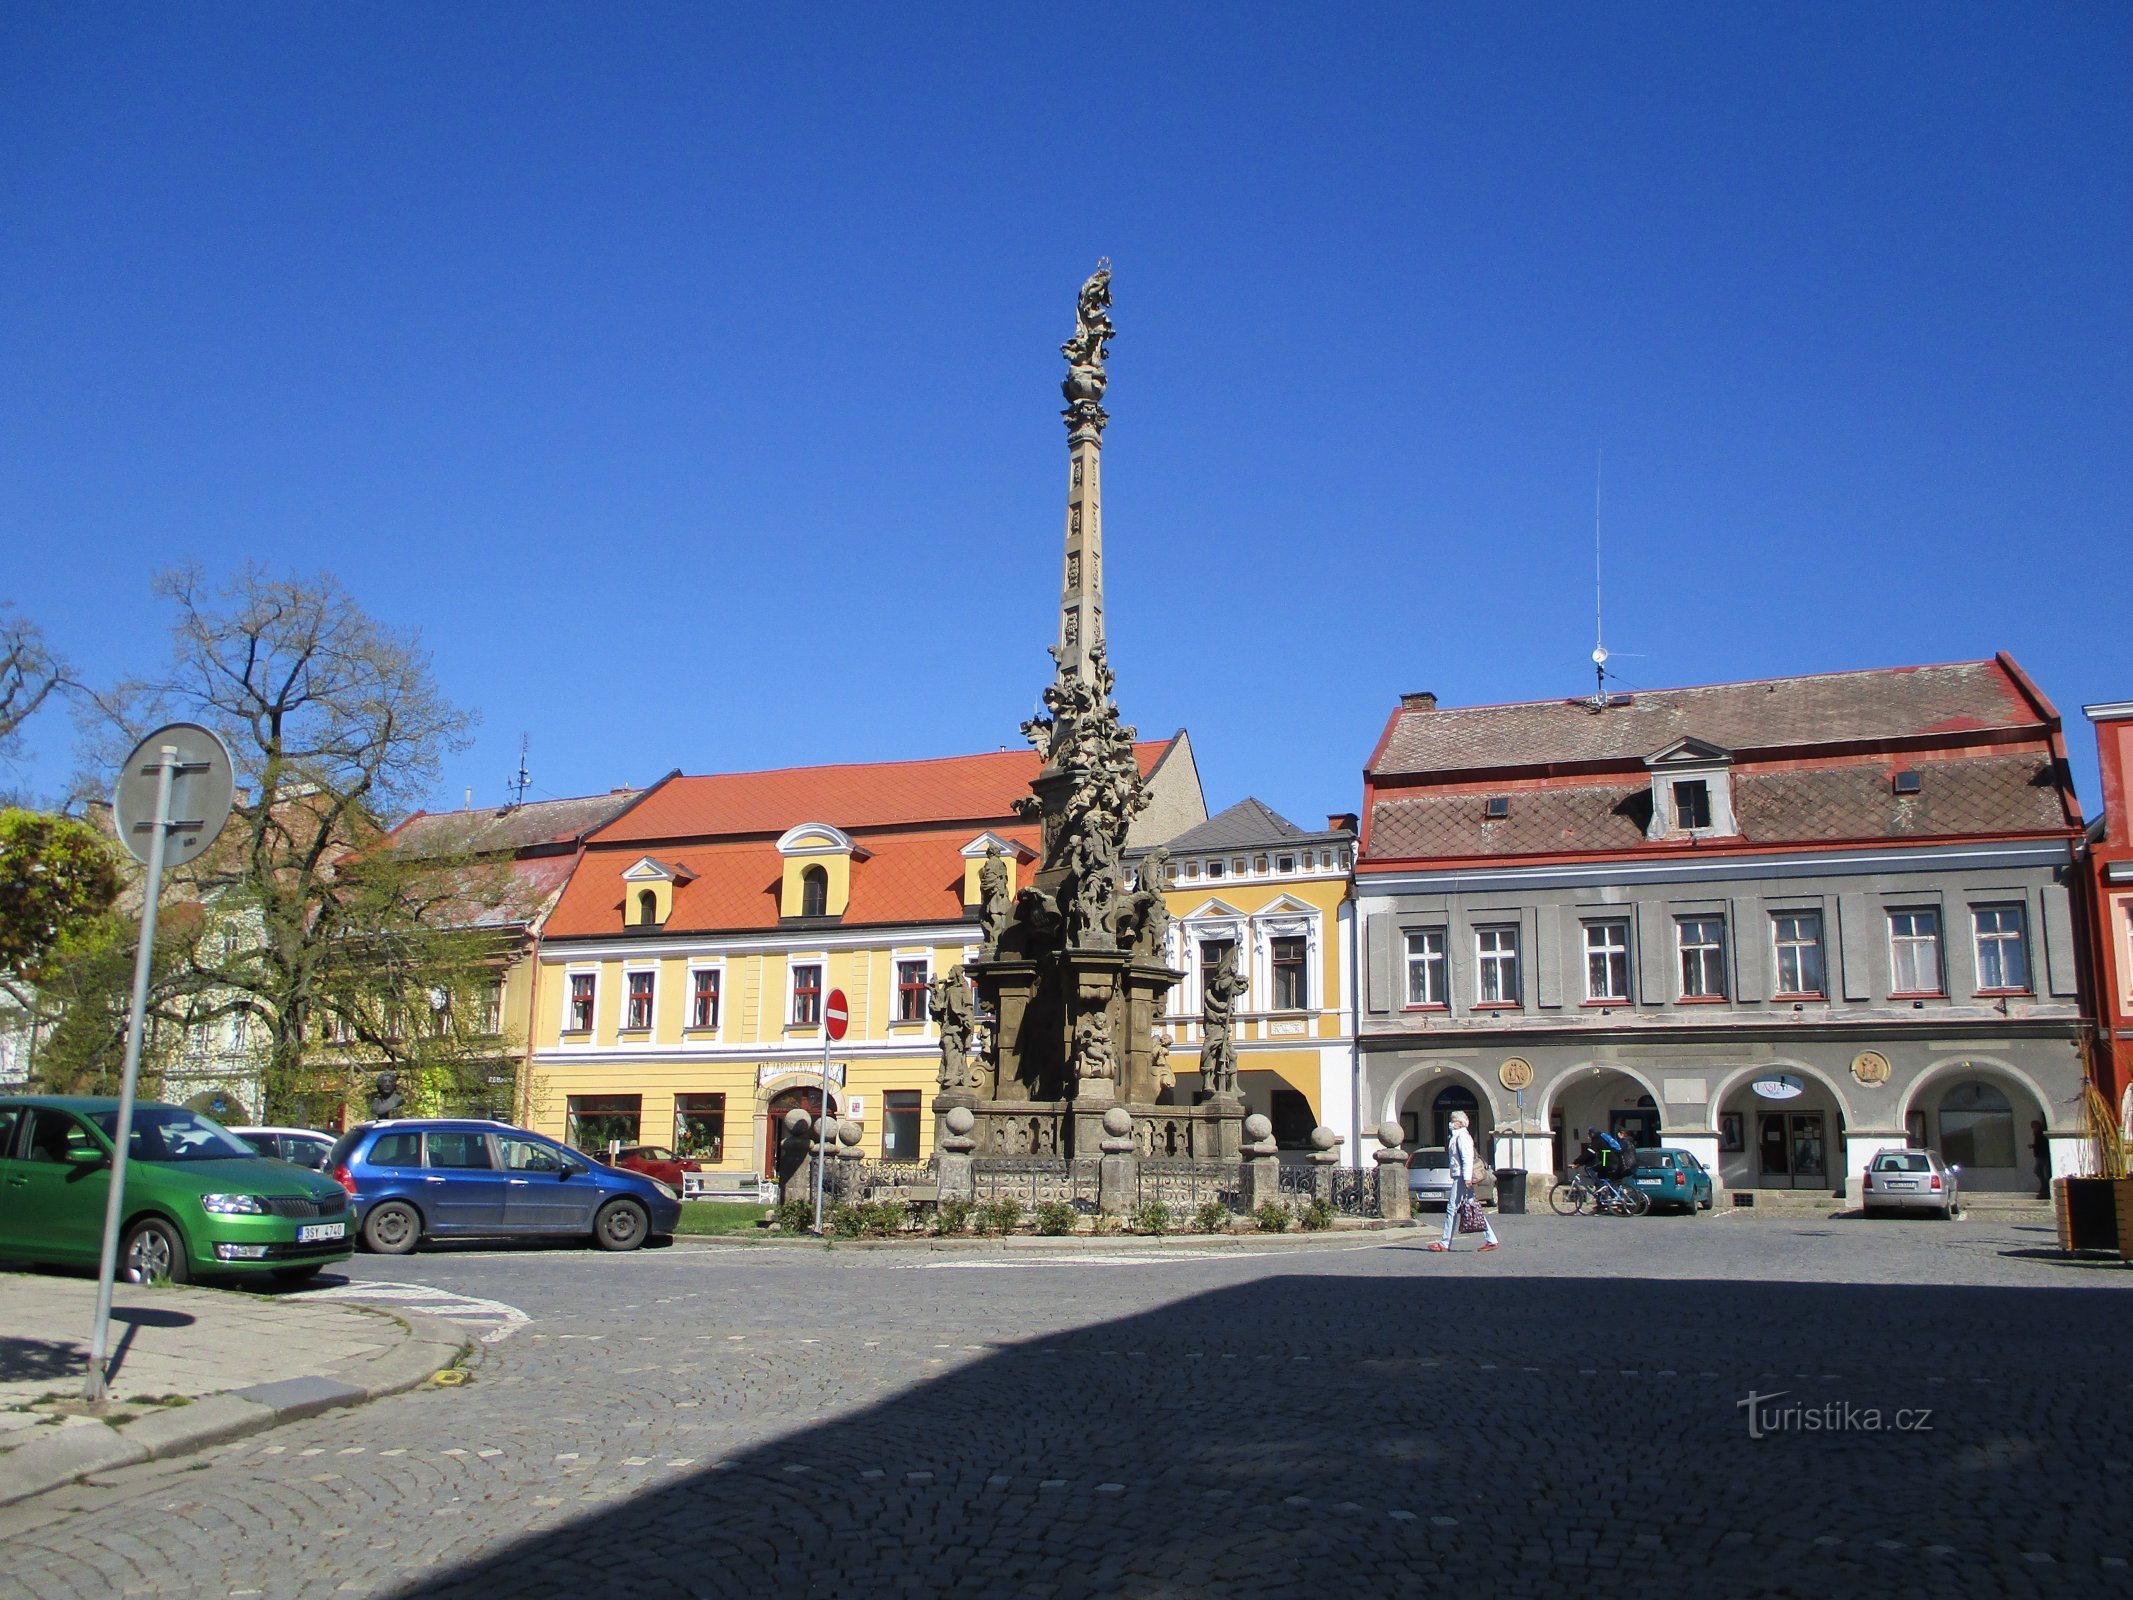 Tschechoslowakischer Armeeplatz (Jaroměř, 22.4.2020. April XNUMX)